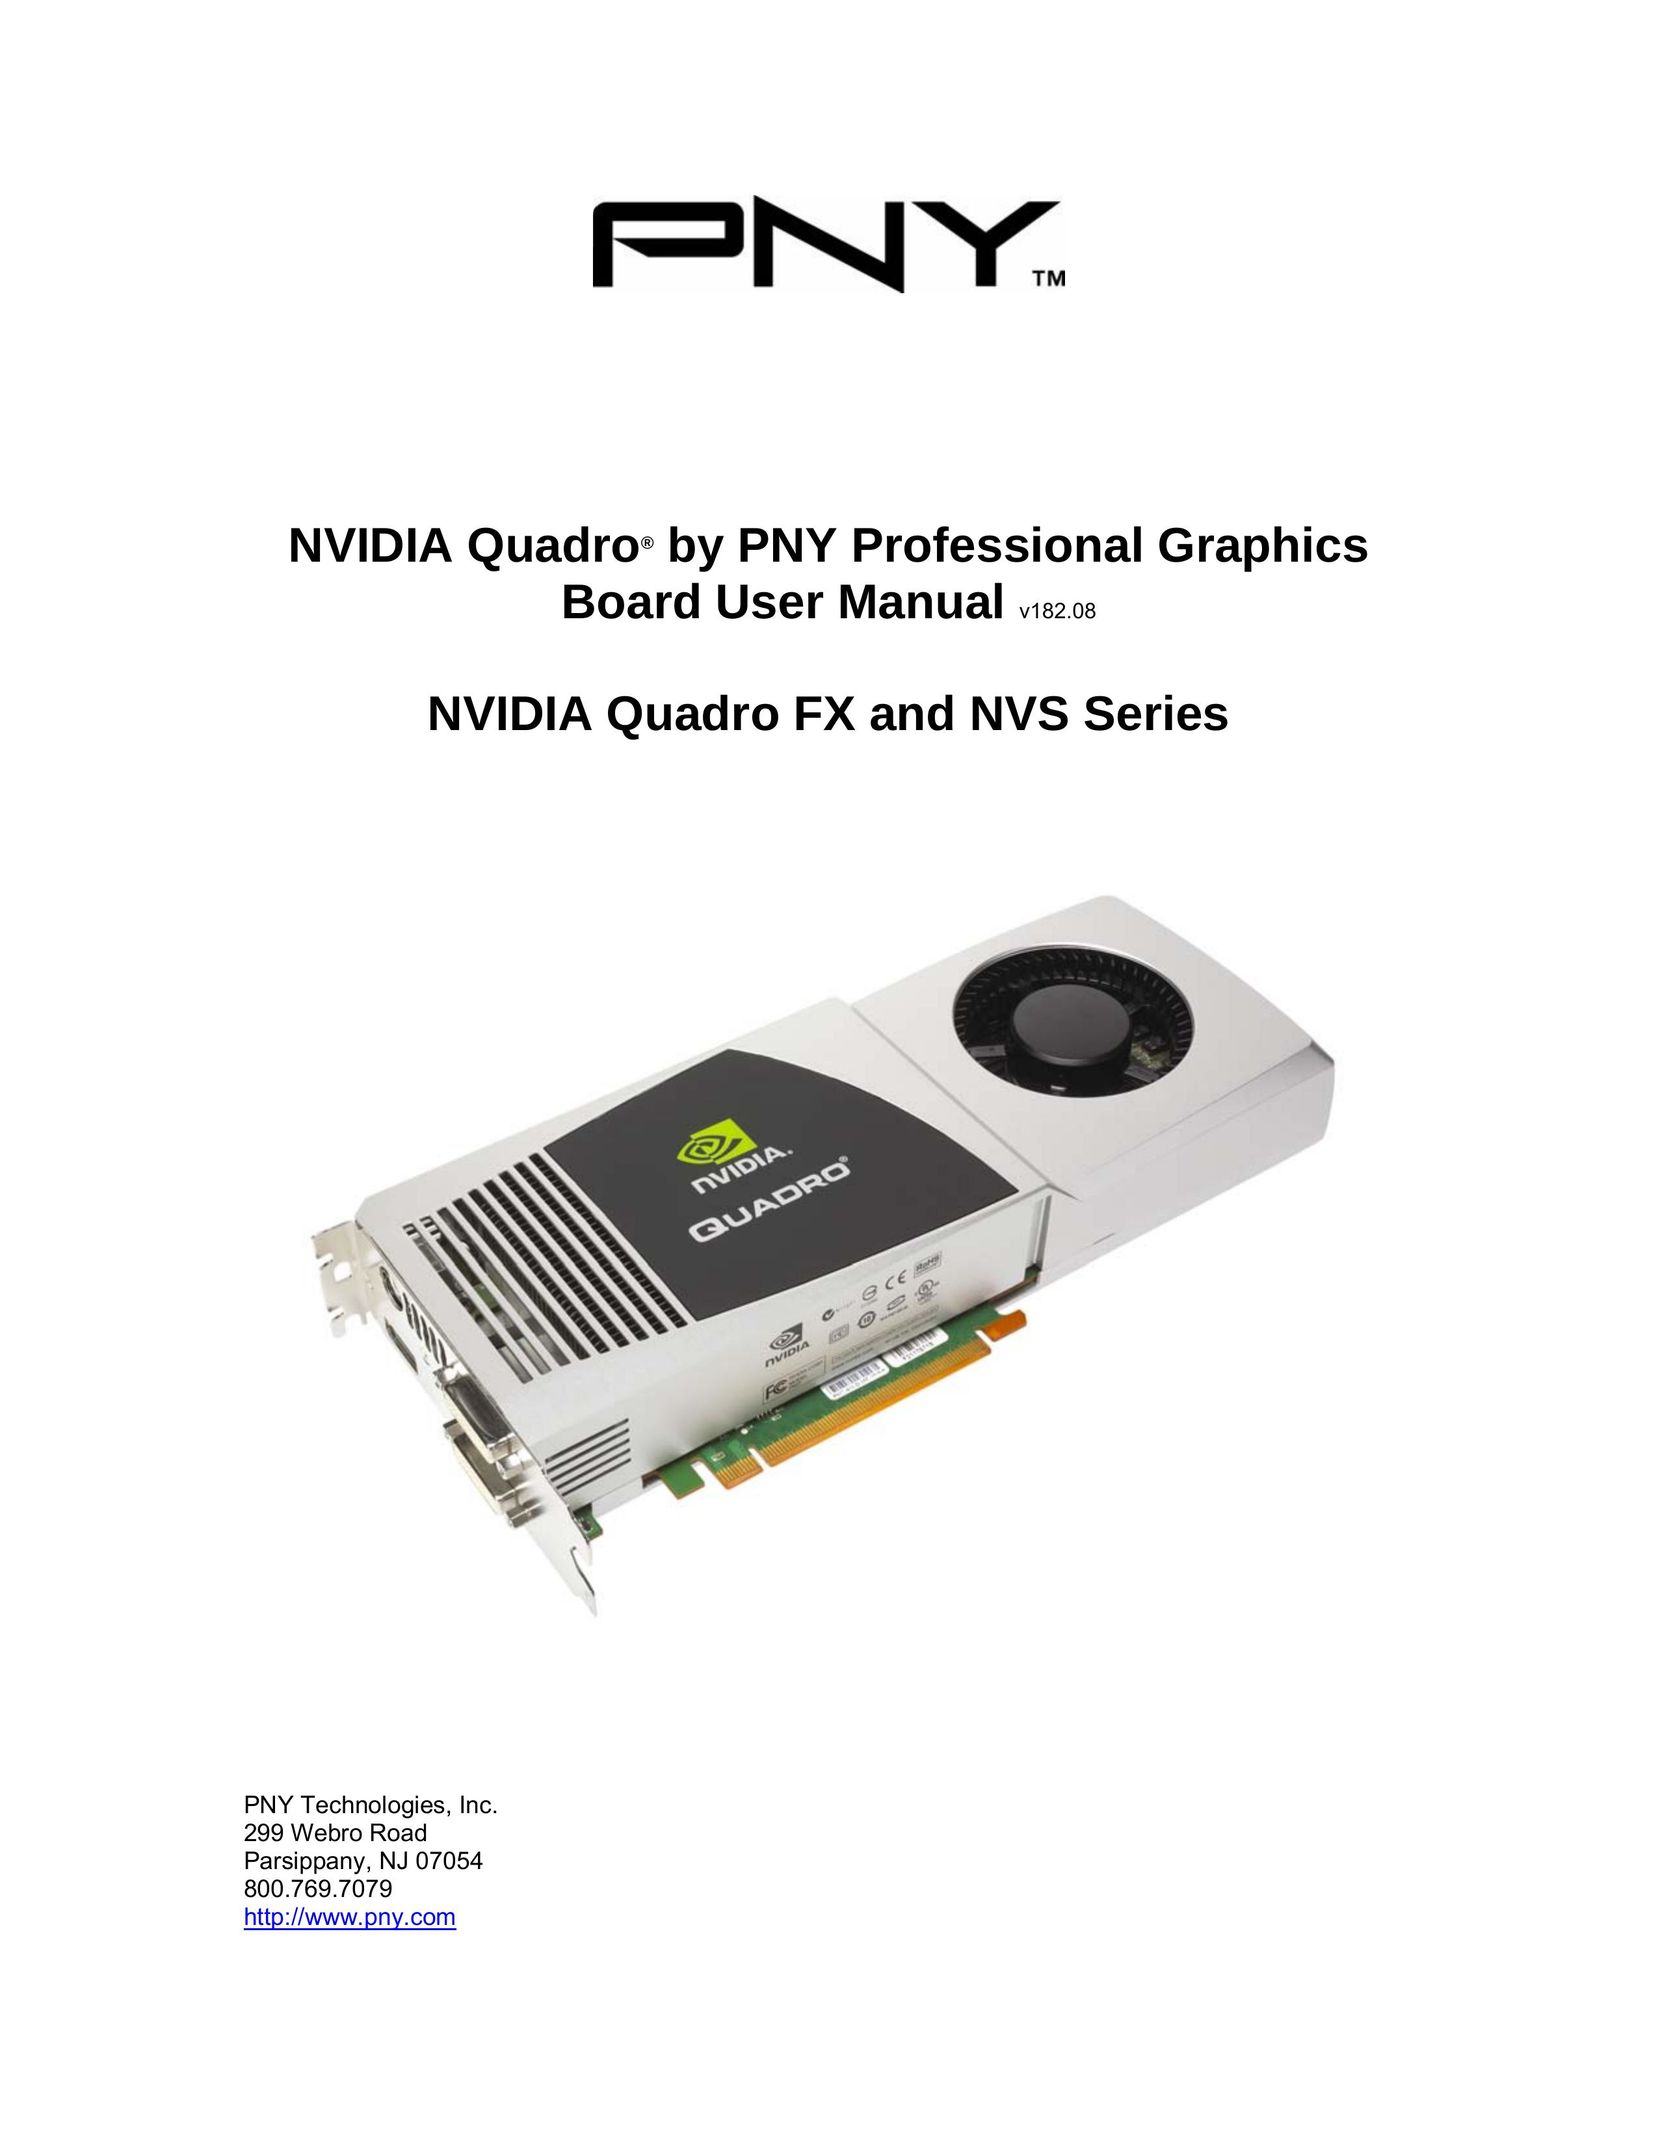 PNY NVS 420 Computer Hardware User Manual